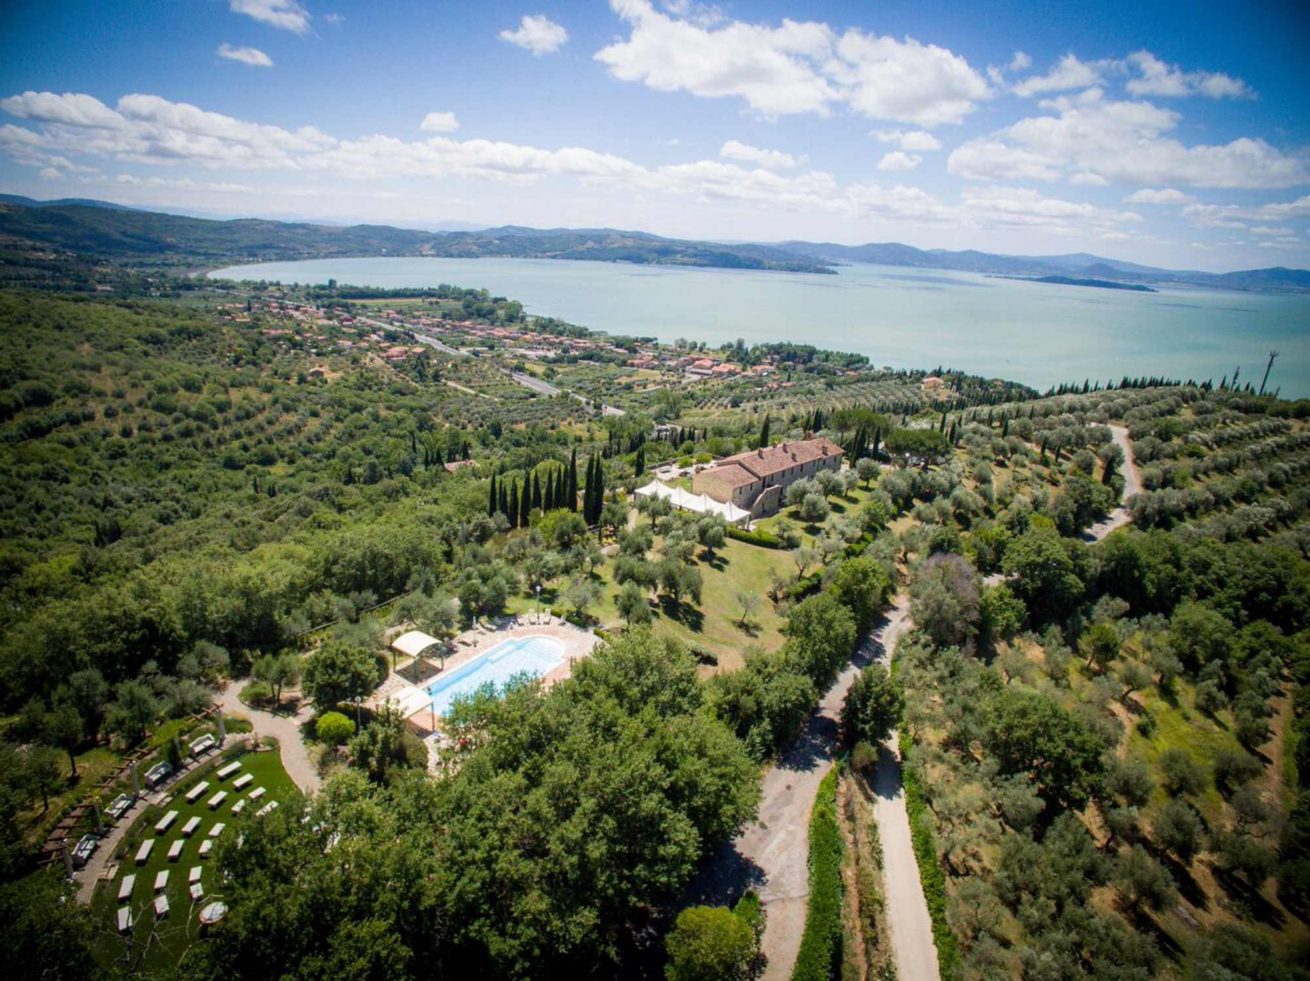 Pool Wedding ideas. Amazing view of the pool area, garden temple, villa and Lake Trasimeno.